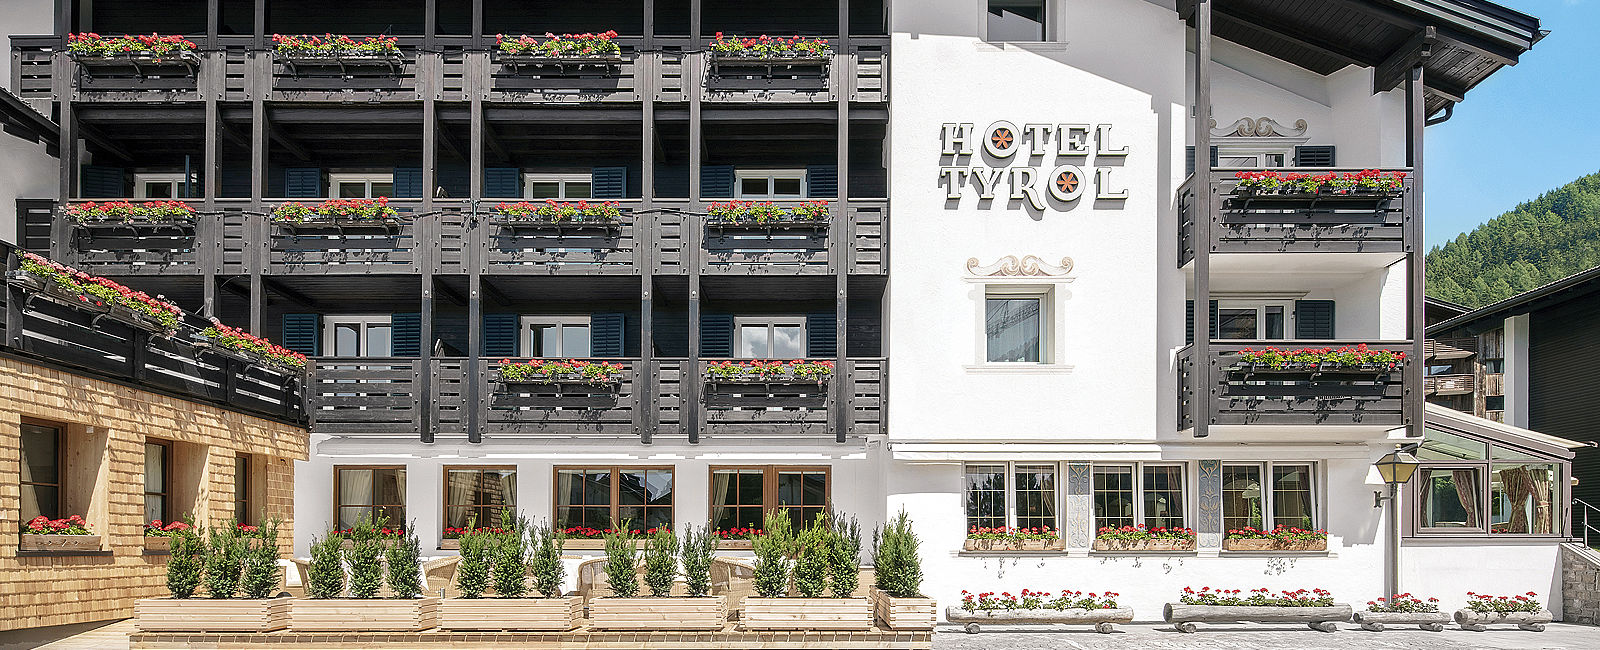 VERY SPECIAL HOTEL
 Hotel Tyrol 
 Winter auf Wolke 7 